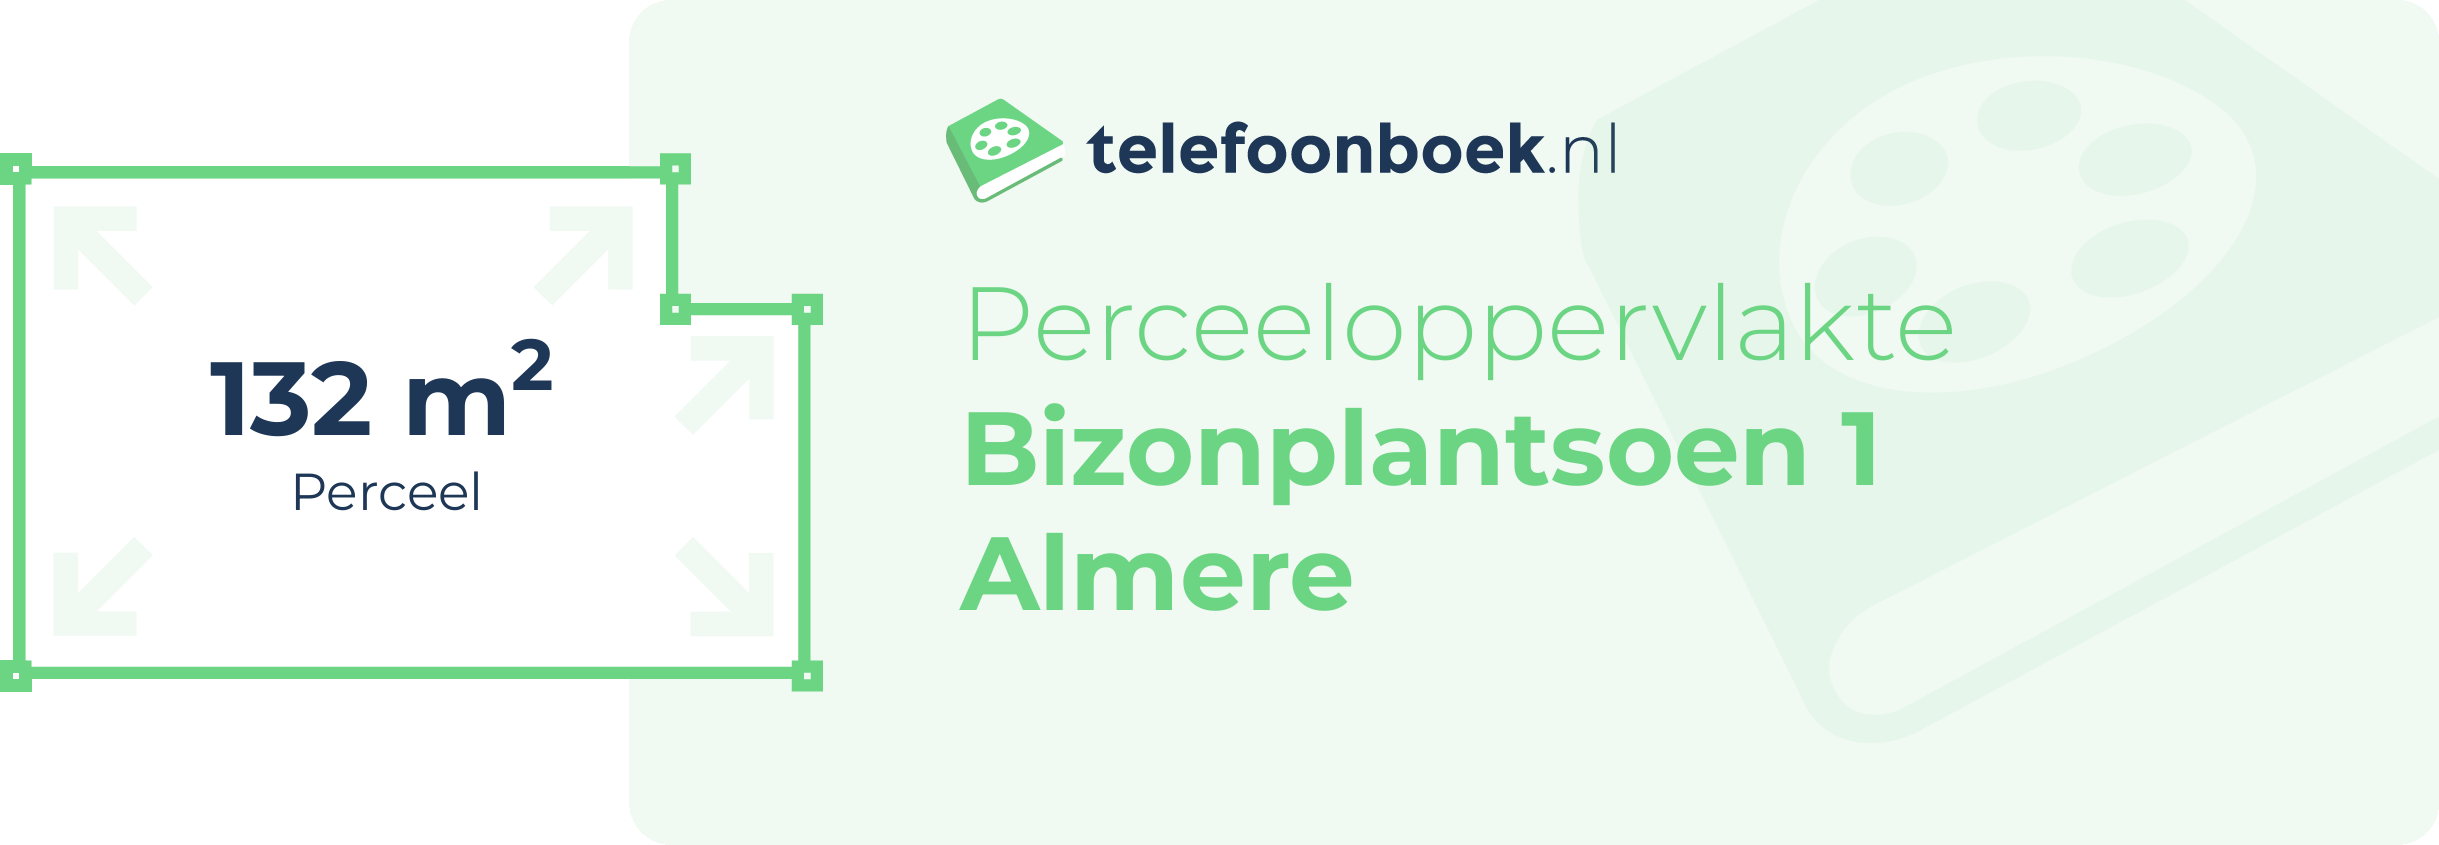 Perceeloppervlakte Bizonplantsoen 1 Almere